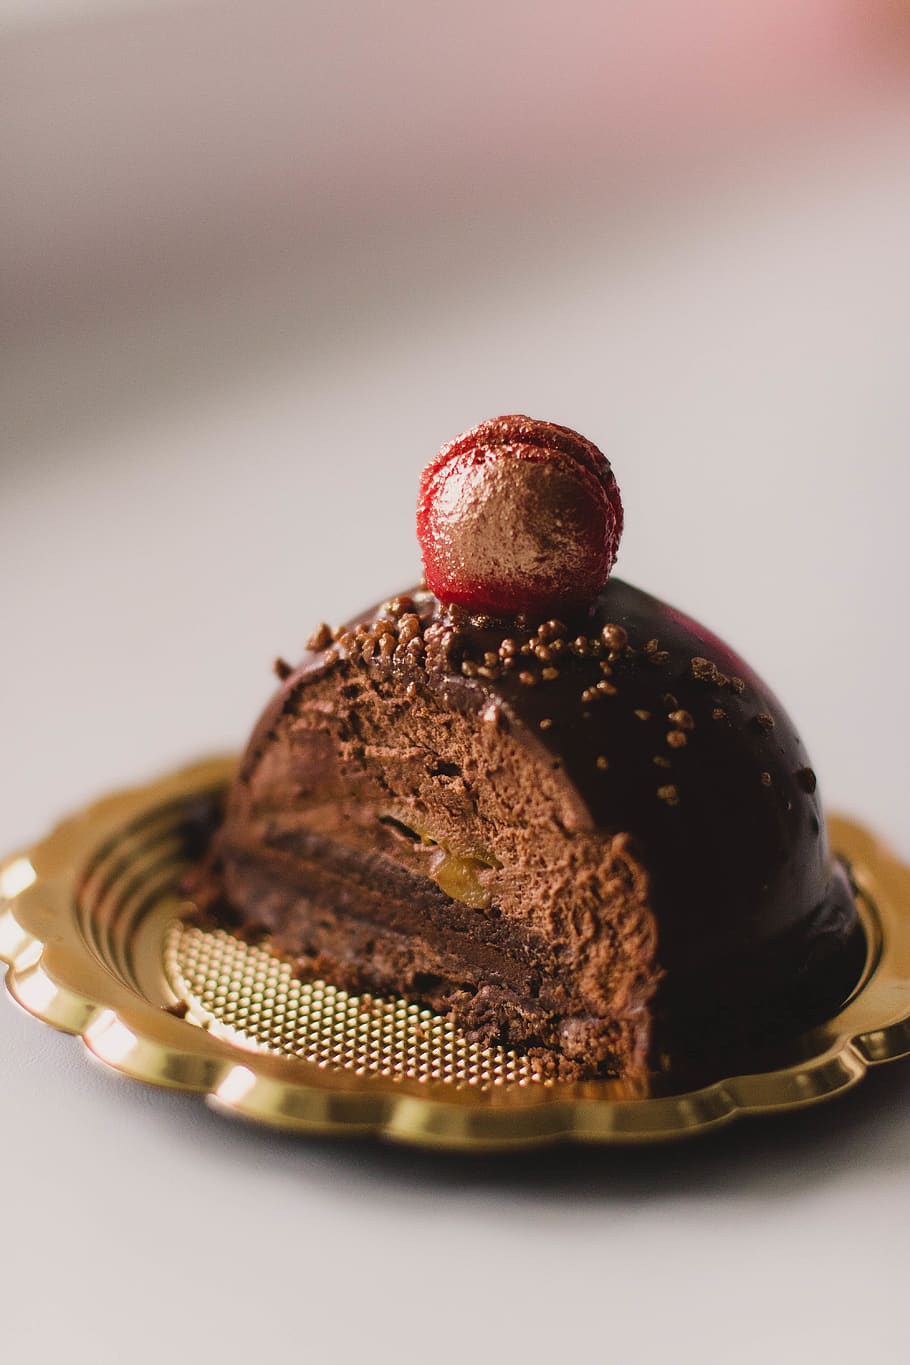 Baked Pastry, blurred background, cake, chocolate, chocolate cake